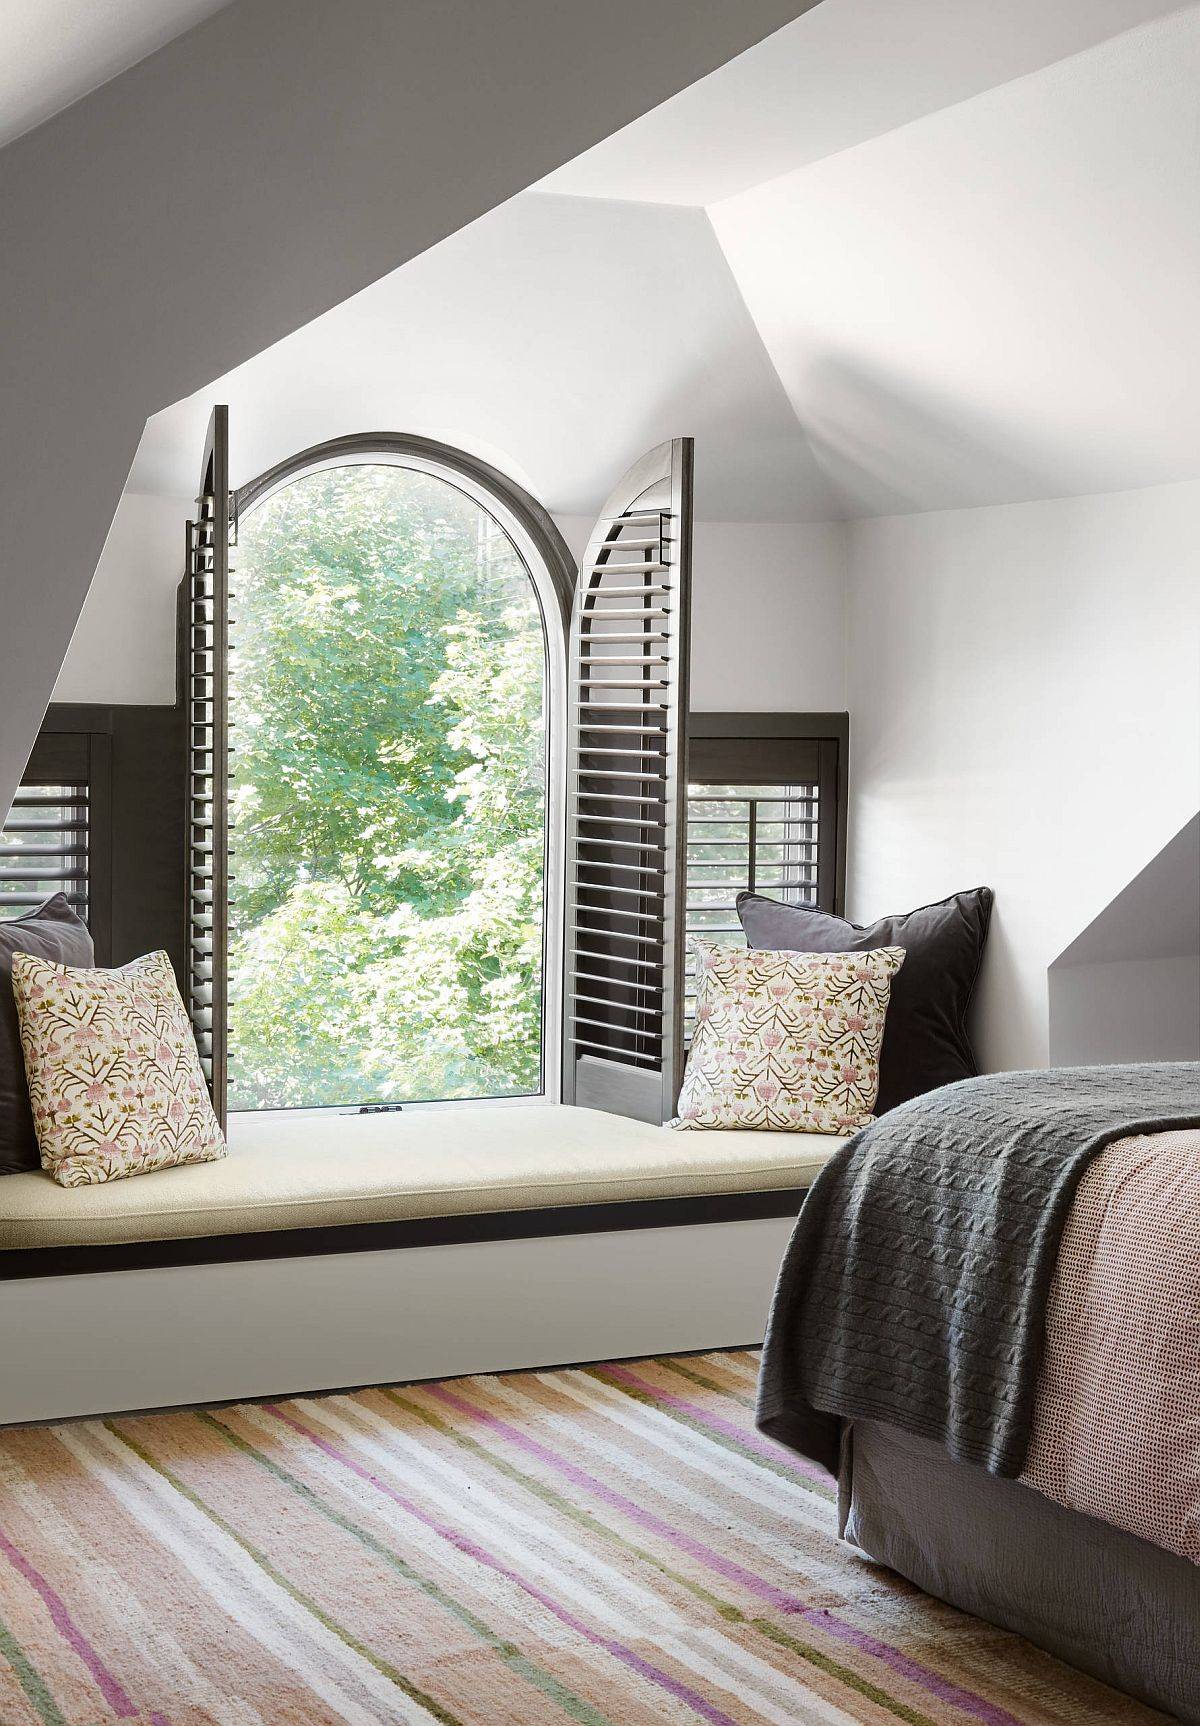 Unique-window-design-makes-this-bedroom-window-seat-extra-special-38171